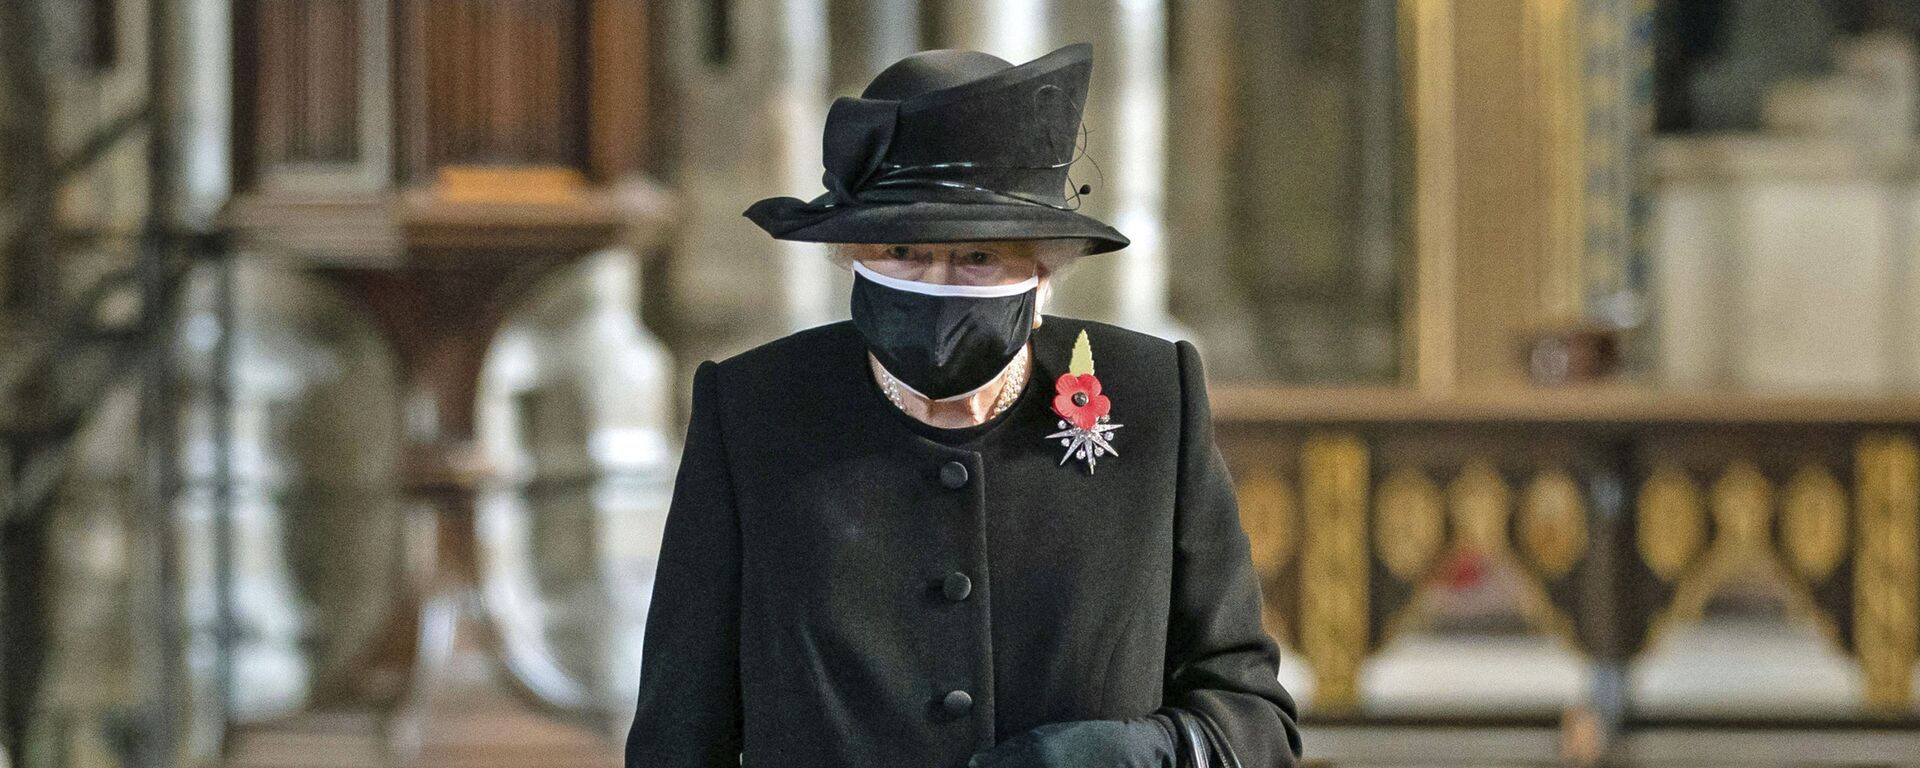 Королева Великобритании Елизавета II на церемонии в Вестминстерском аббатстве - Sputnik Латвия, 1920, 28.04.2021